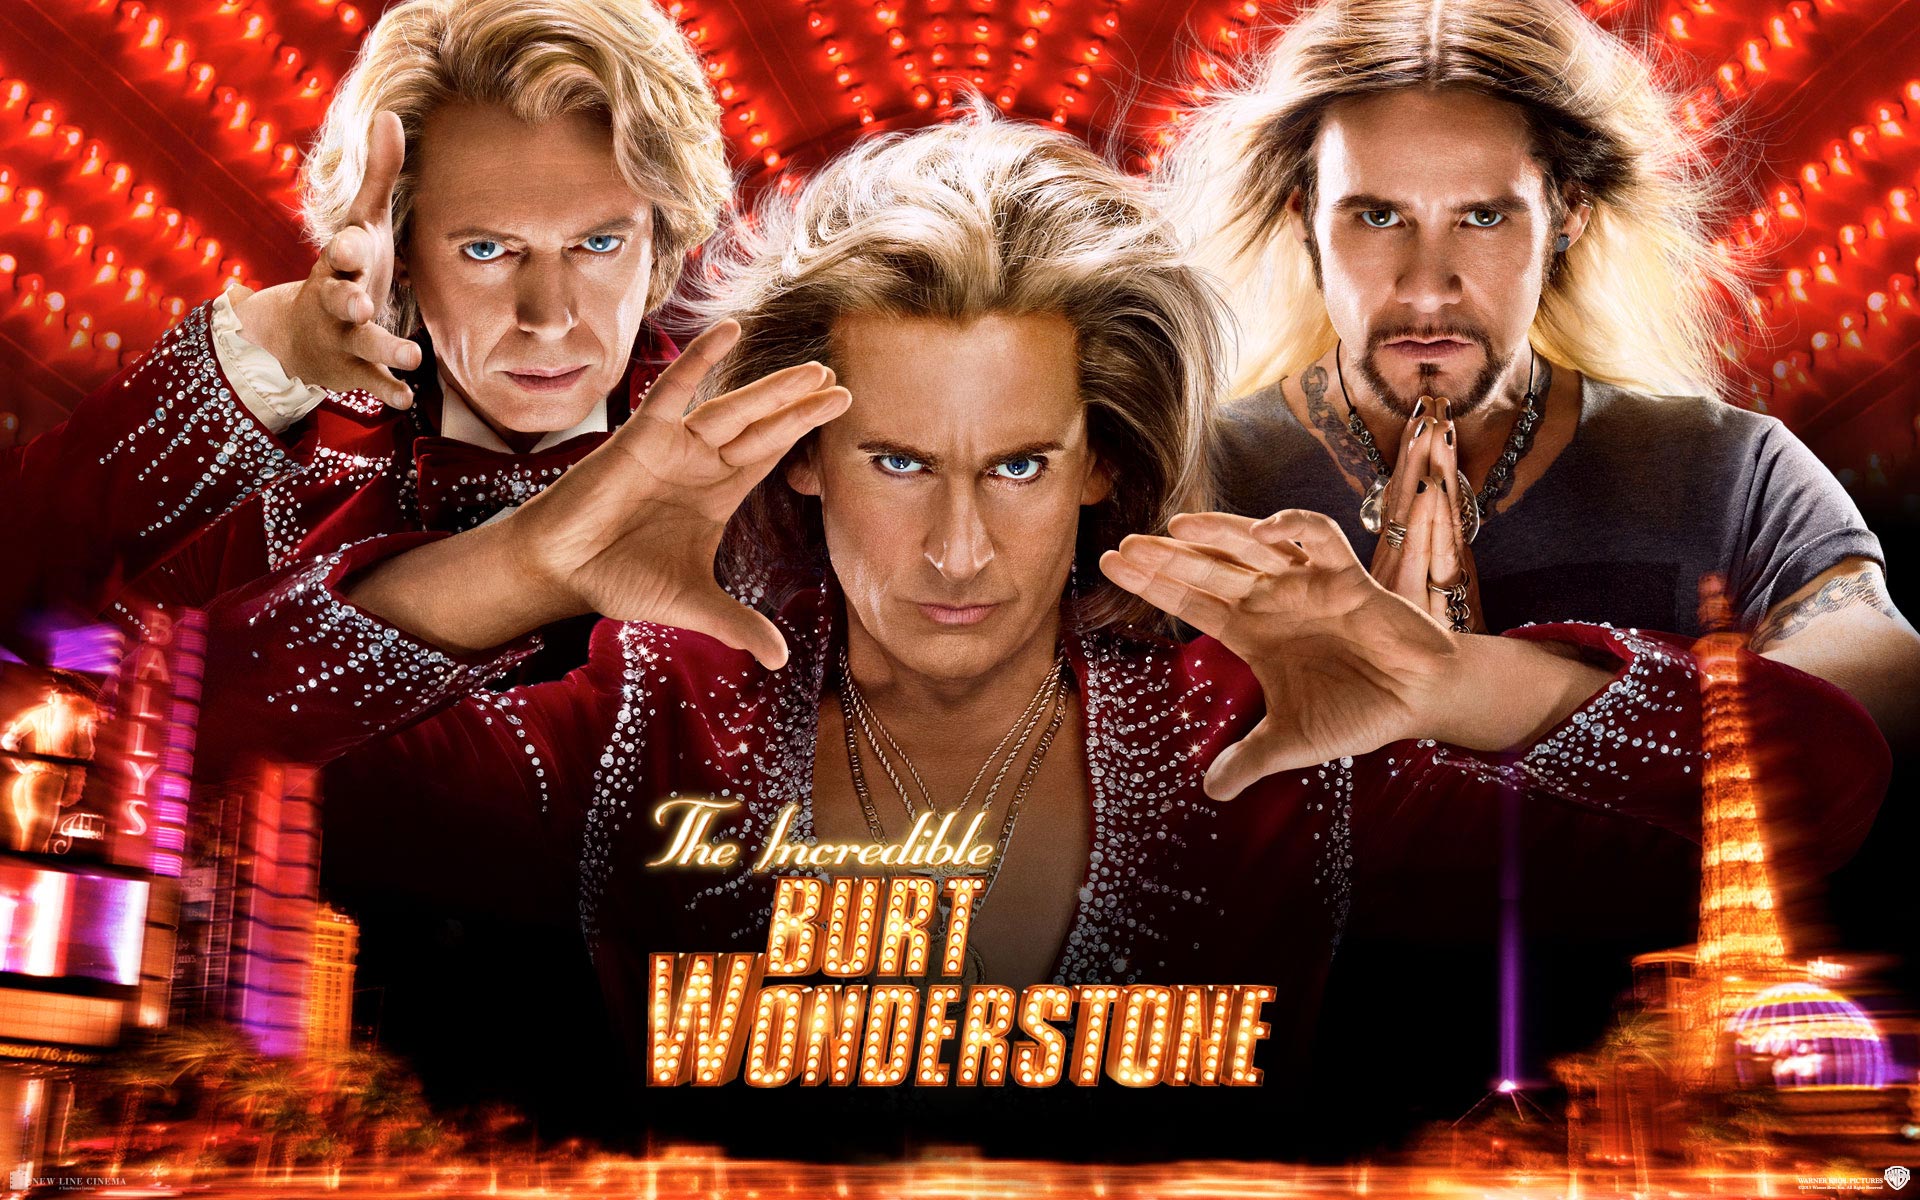 The-Incredible-Burt-Wonderstone_09.jpg